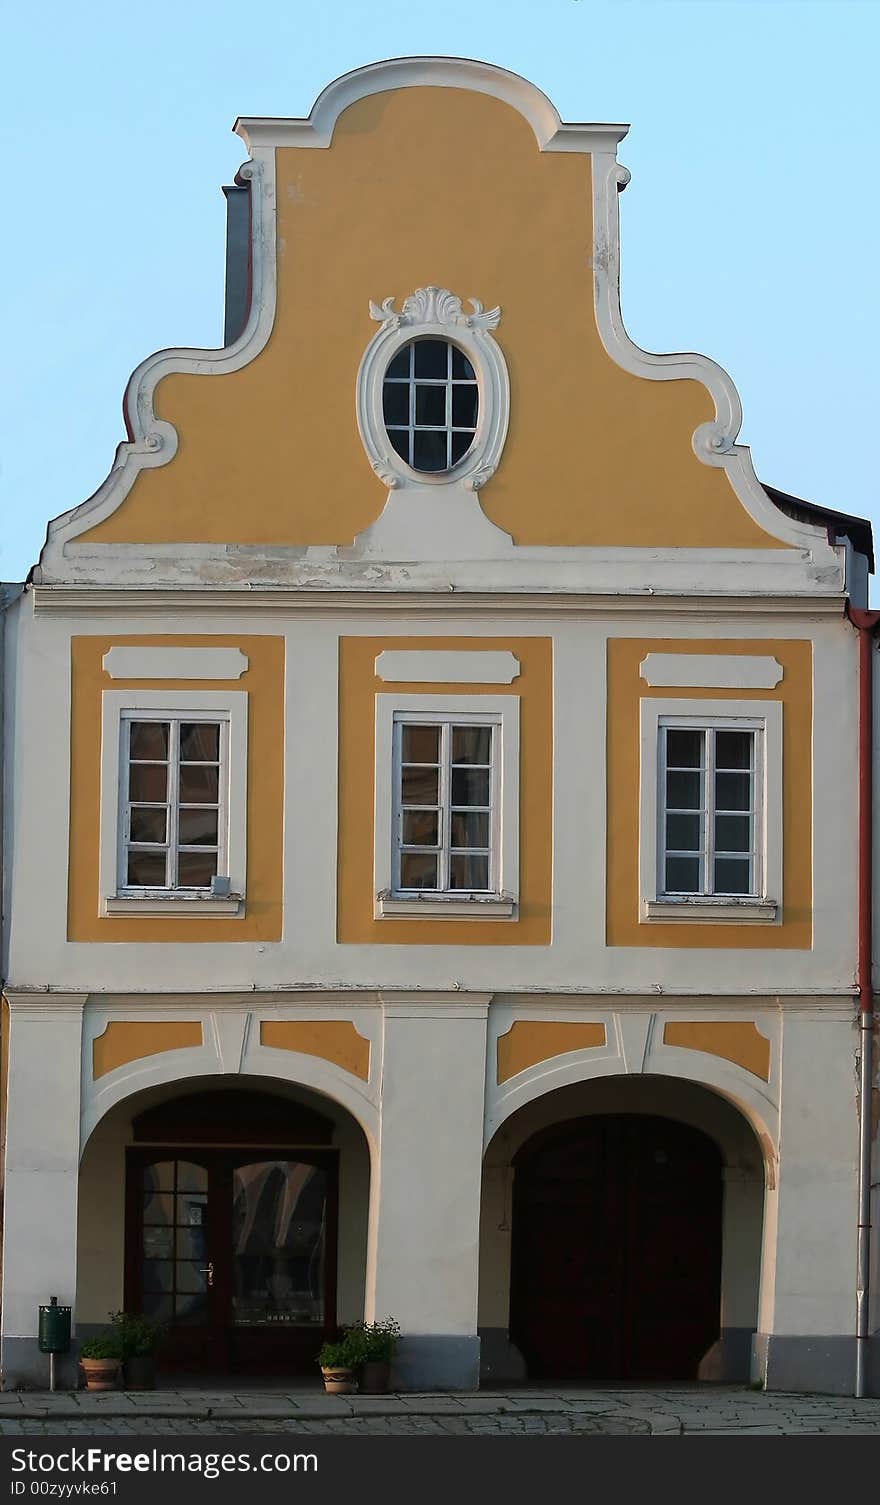 Facade of a historical house in Telc, Czech Republic. Facade of a historical house in Telc, Czech Republic